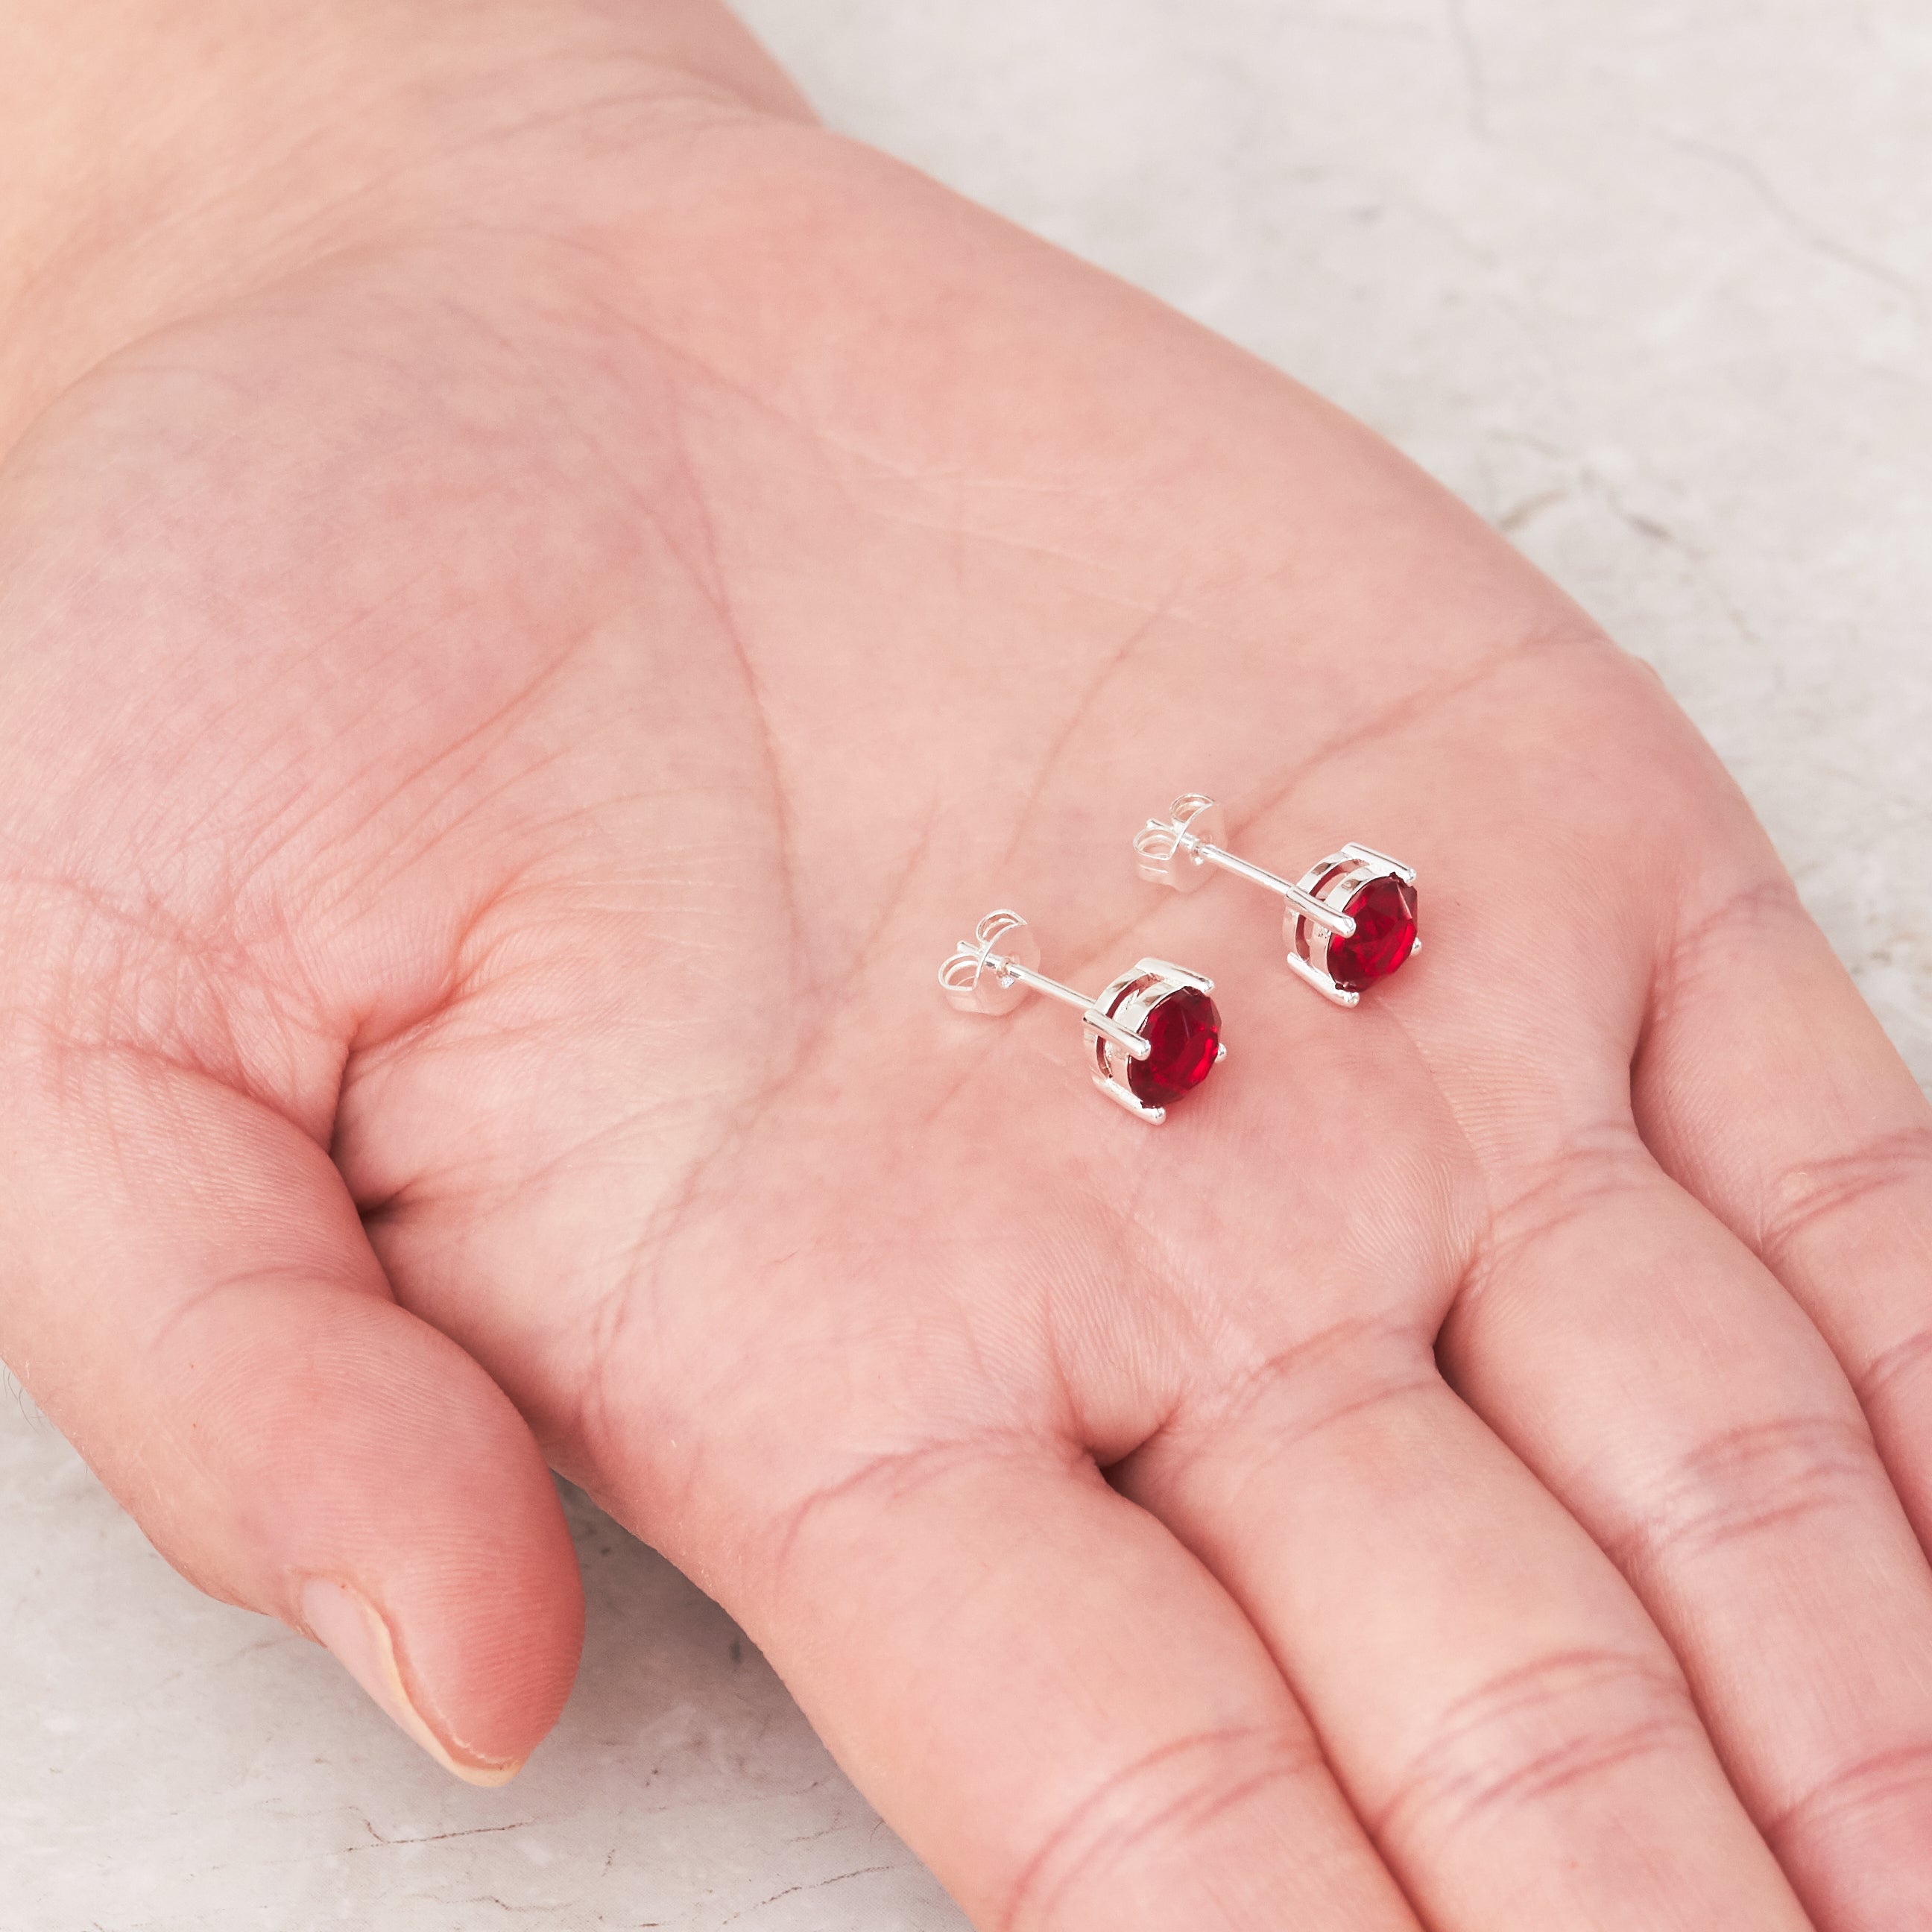 January (Garnet) Birthstone Earrings Created with Zircondia® Crystals